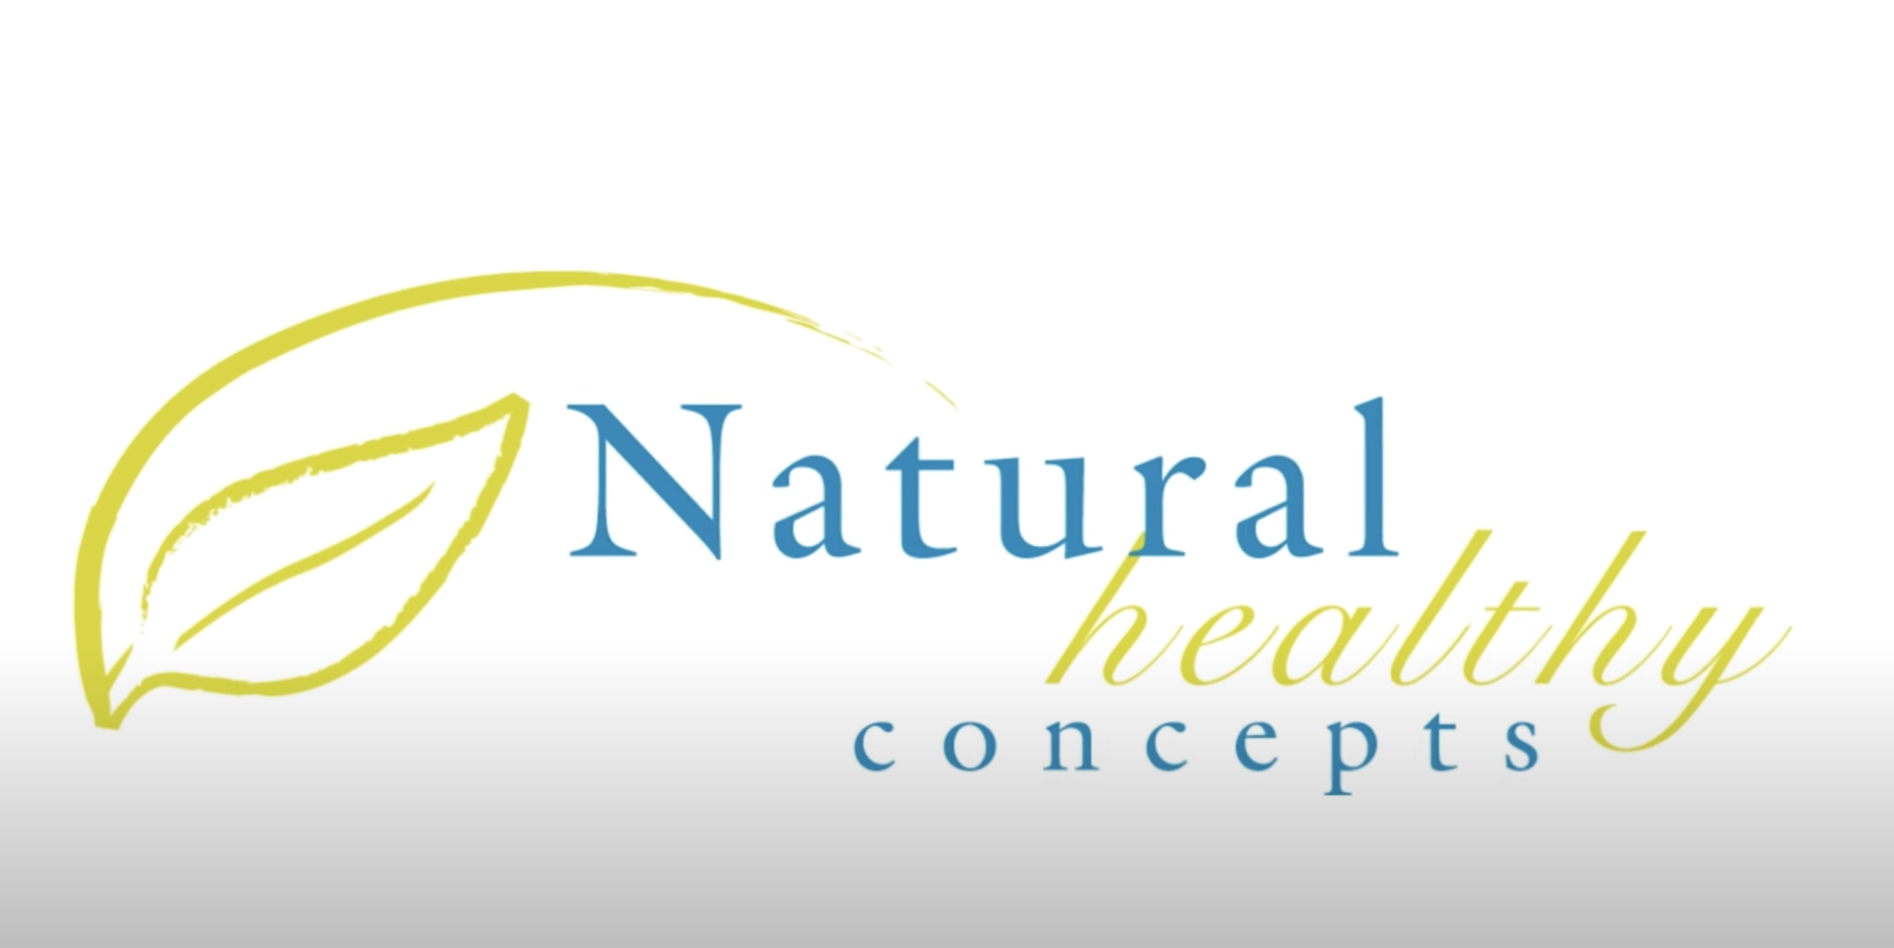 natural healthy concepts image